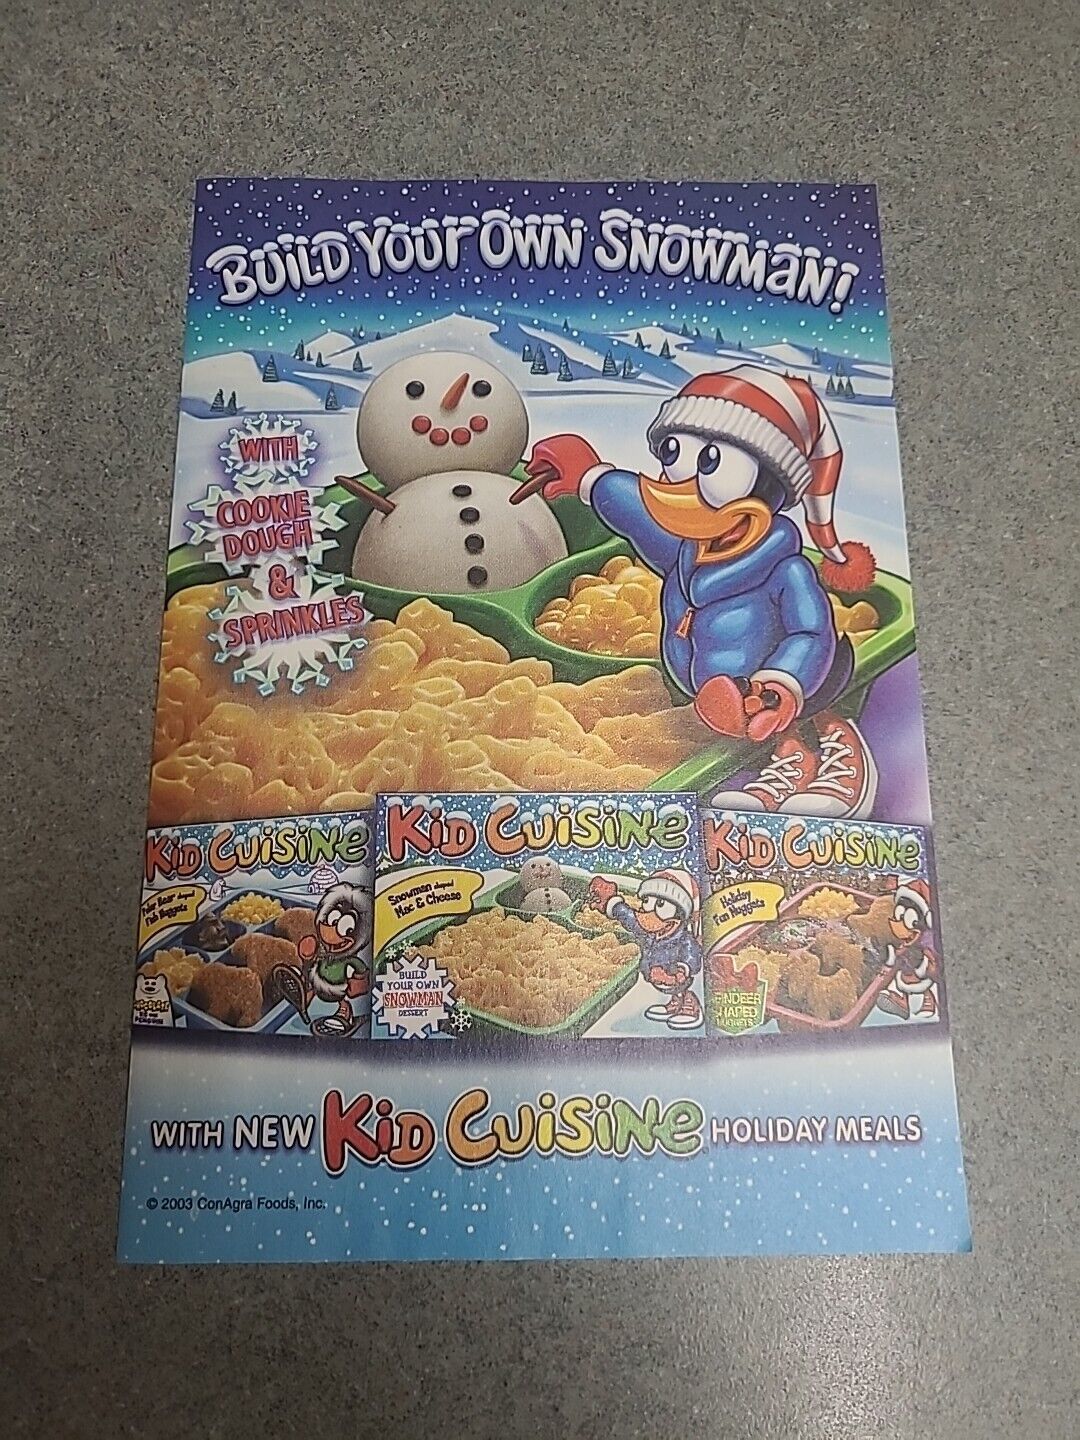 Kid Cuisine Holiday Meals Snowman Original Print Ad 2003 5x7